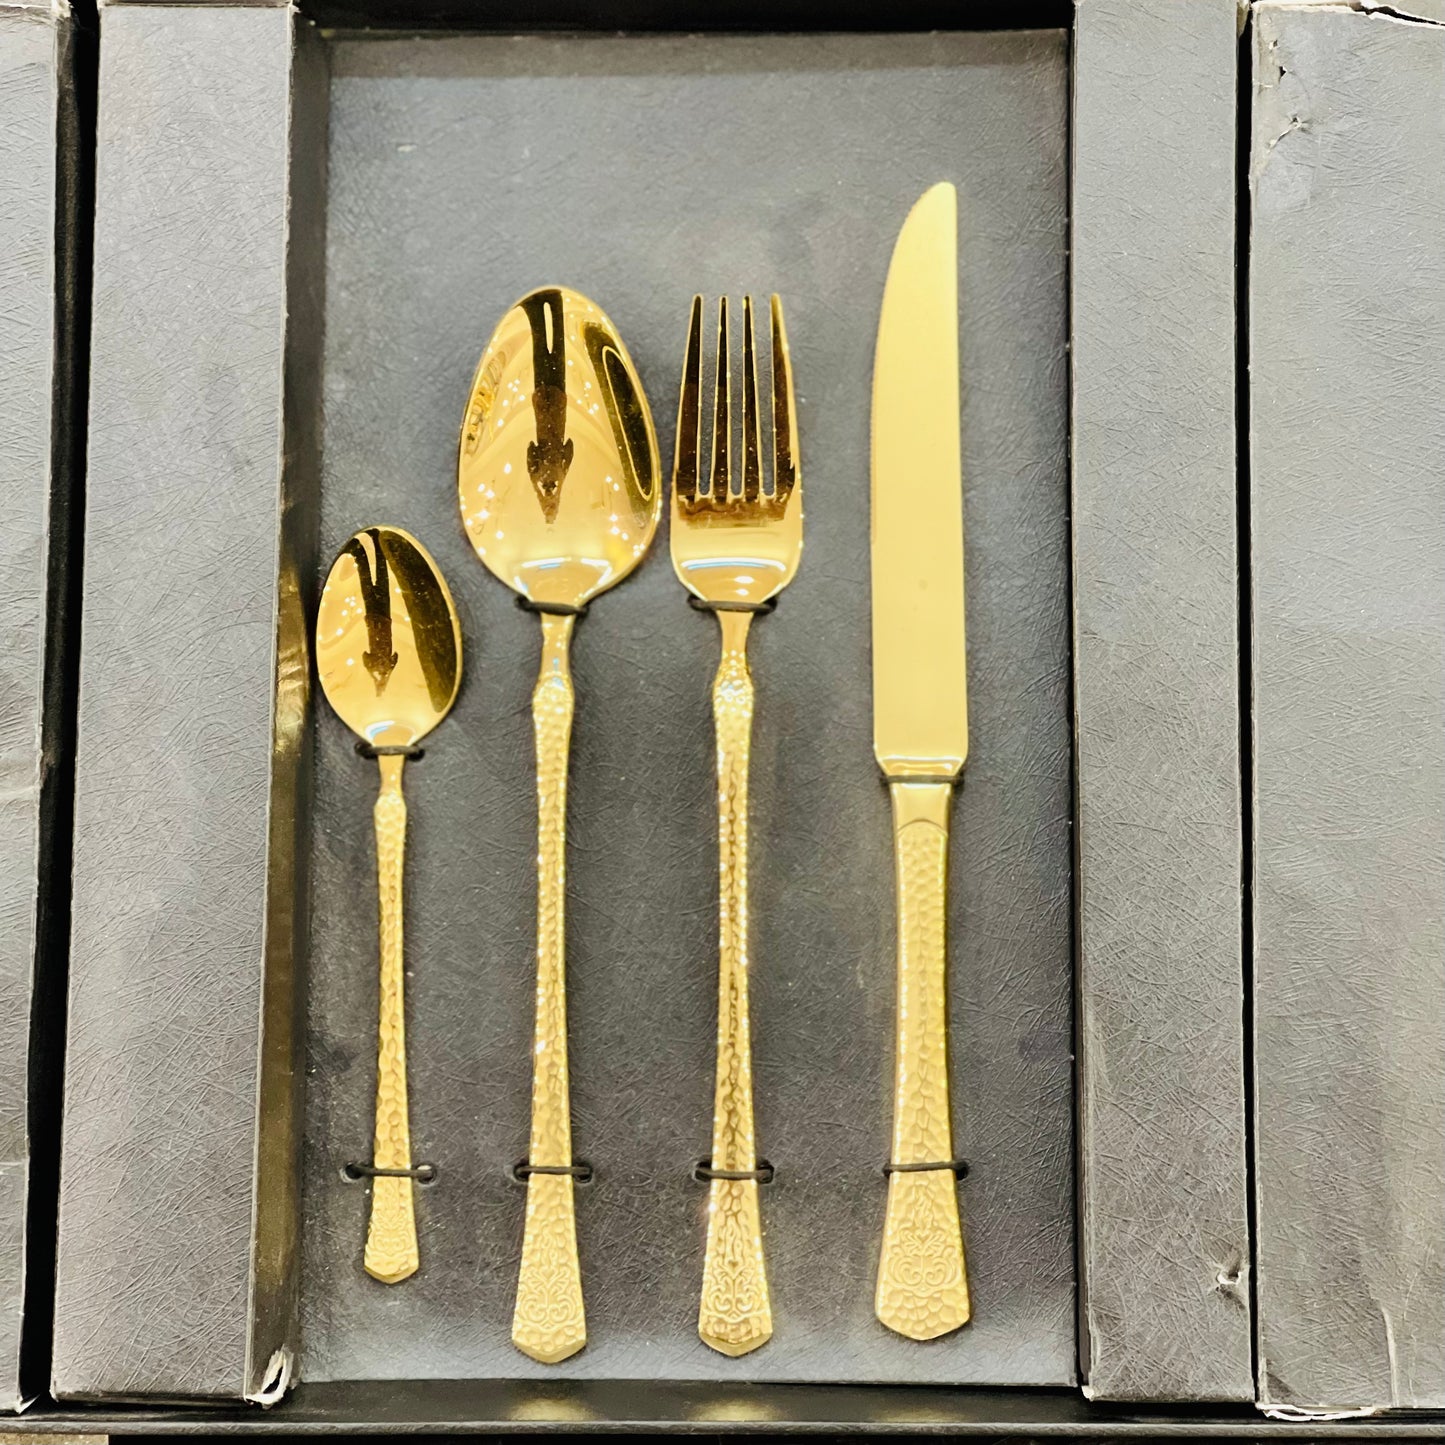 24 Pieces Golden Cutlery Set